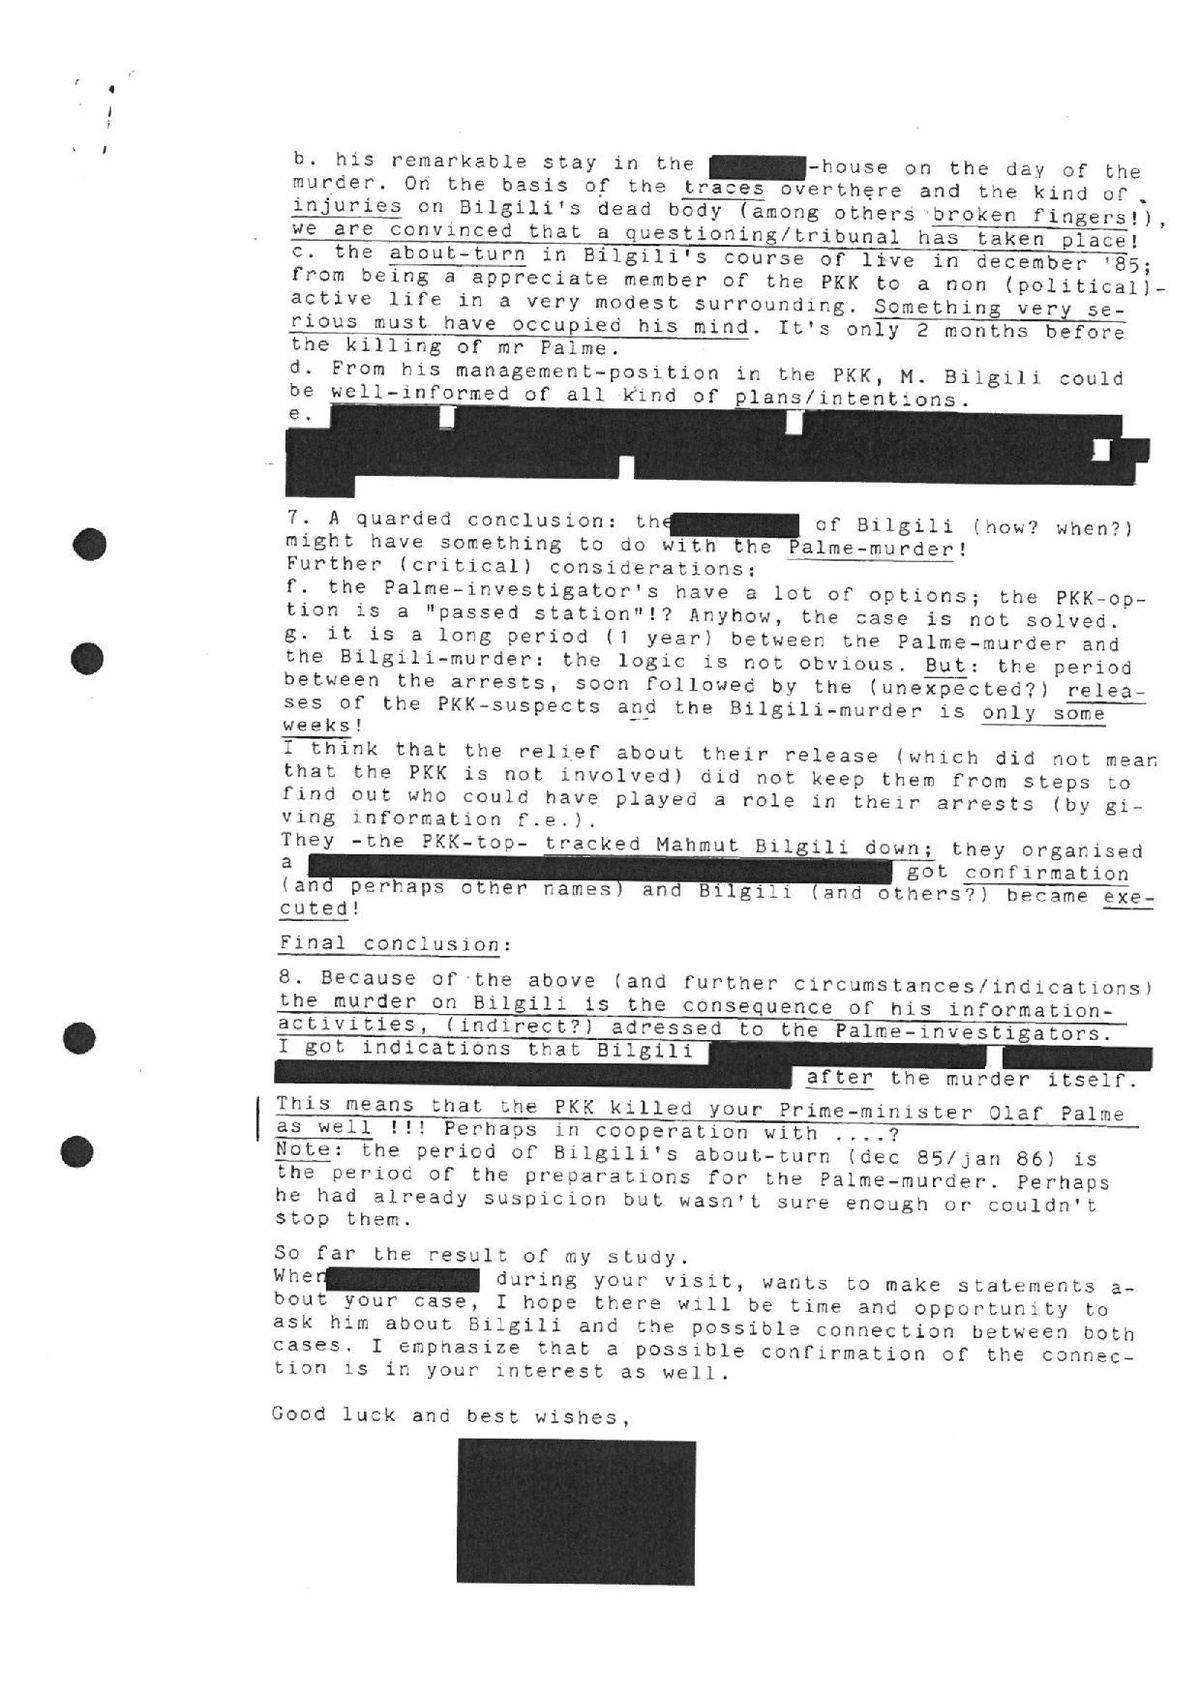 Pol-1989-03-07 Y13604-10 Uppslag Mahmut Bilgili - Kontakter med Dolf von Soest sidorna 53-61 sidorna 1-2.pdf